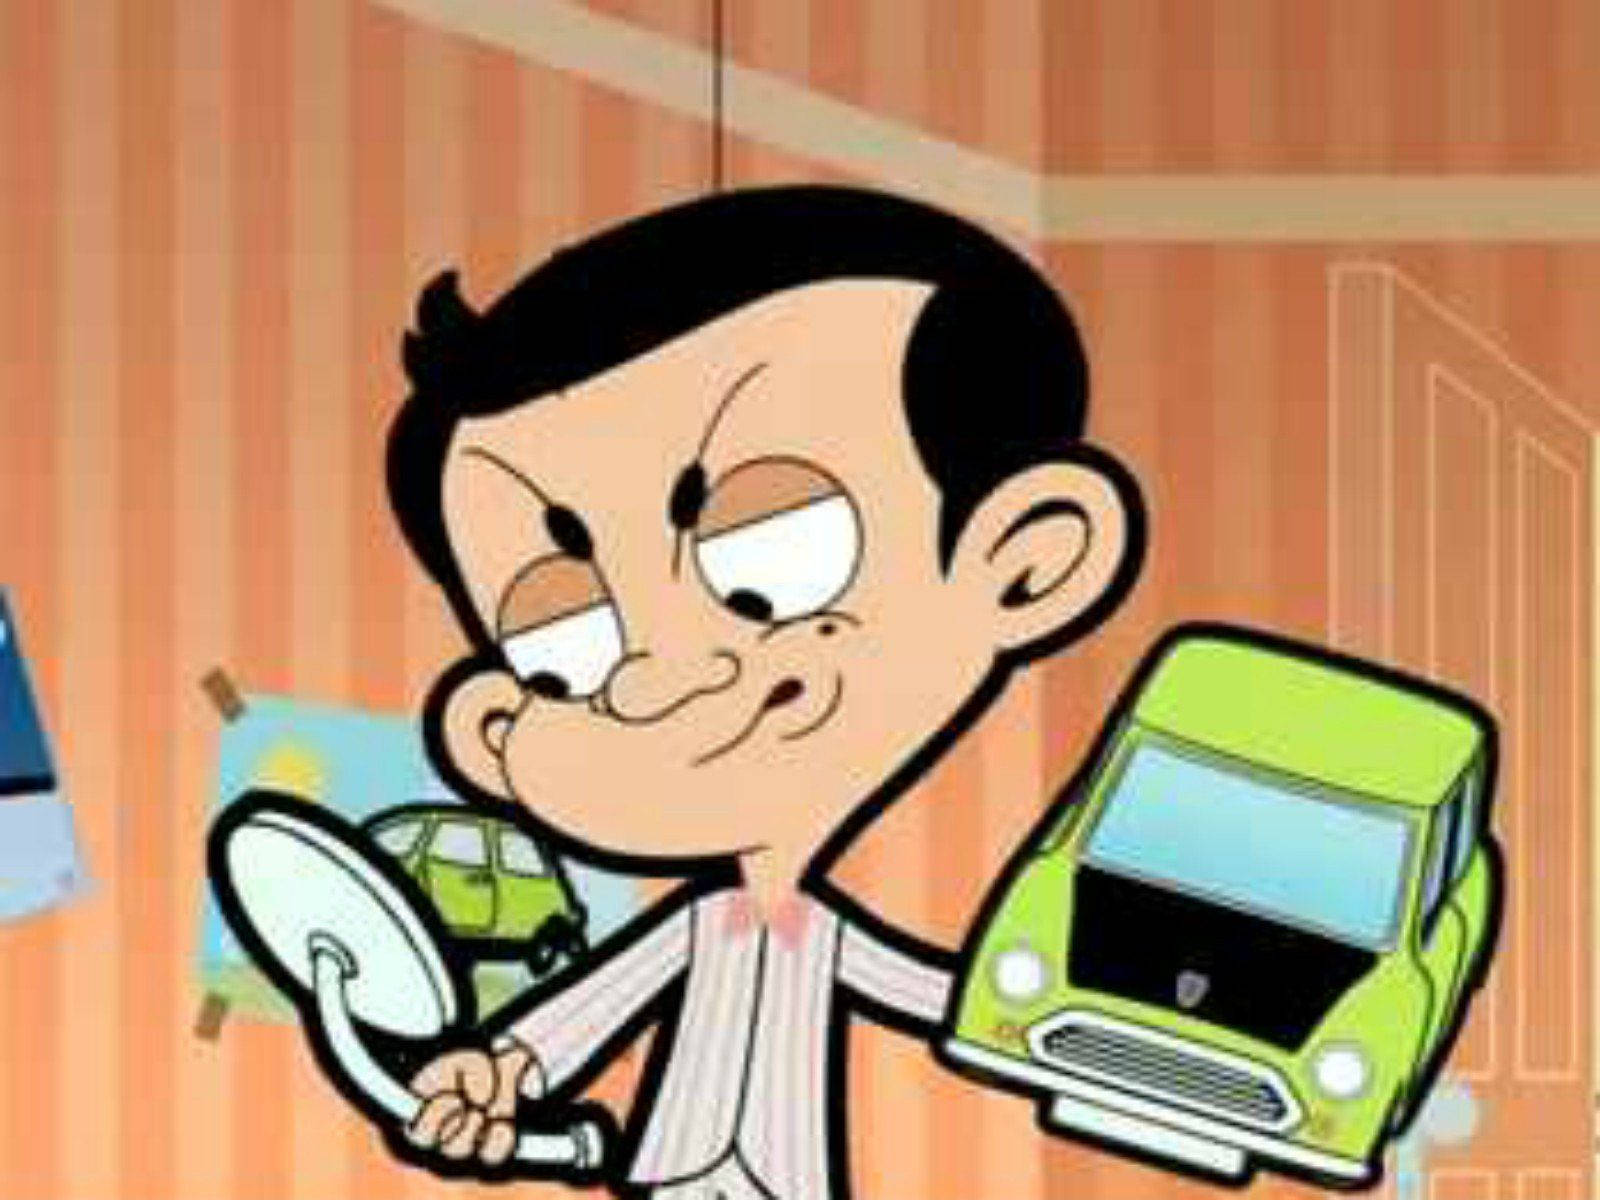 Mr. Bean Cartoon Confused Toy